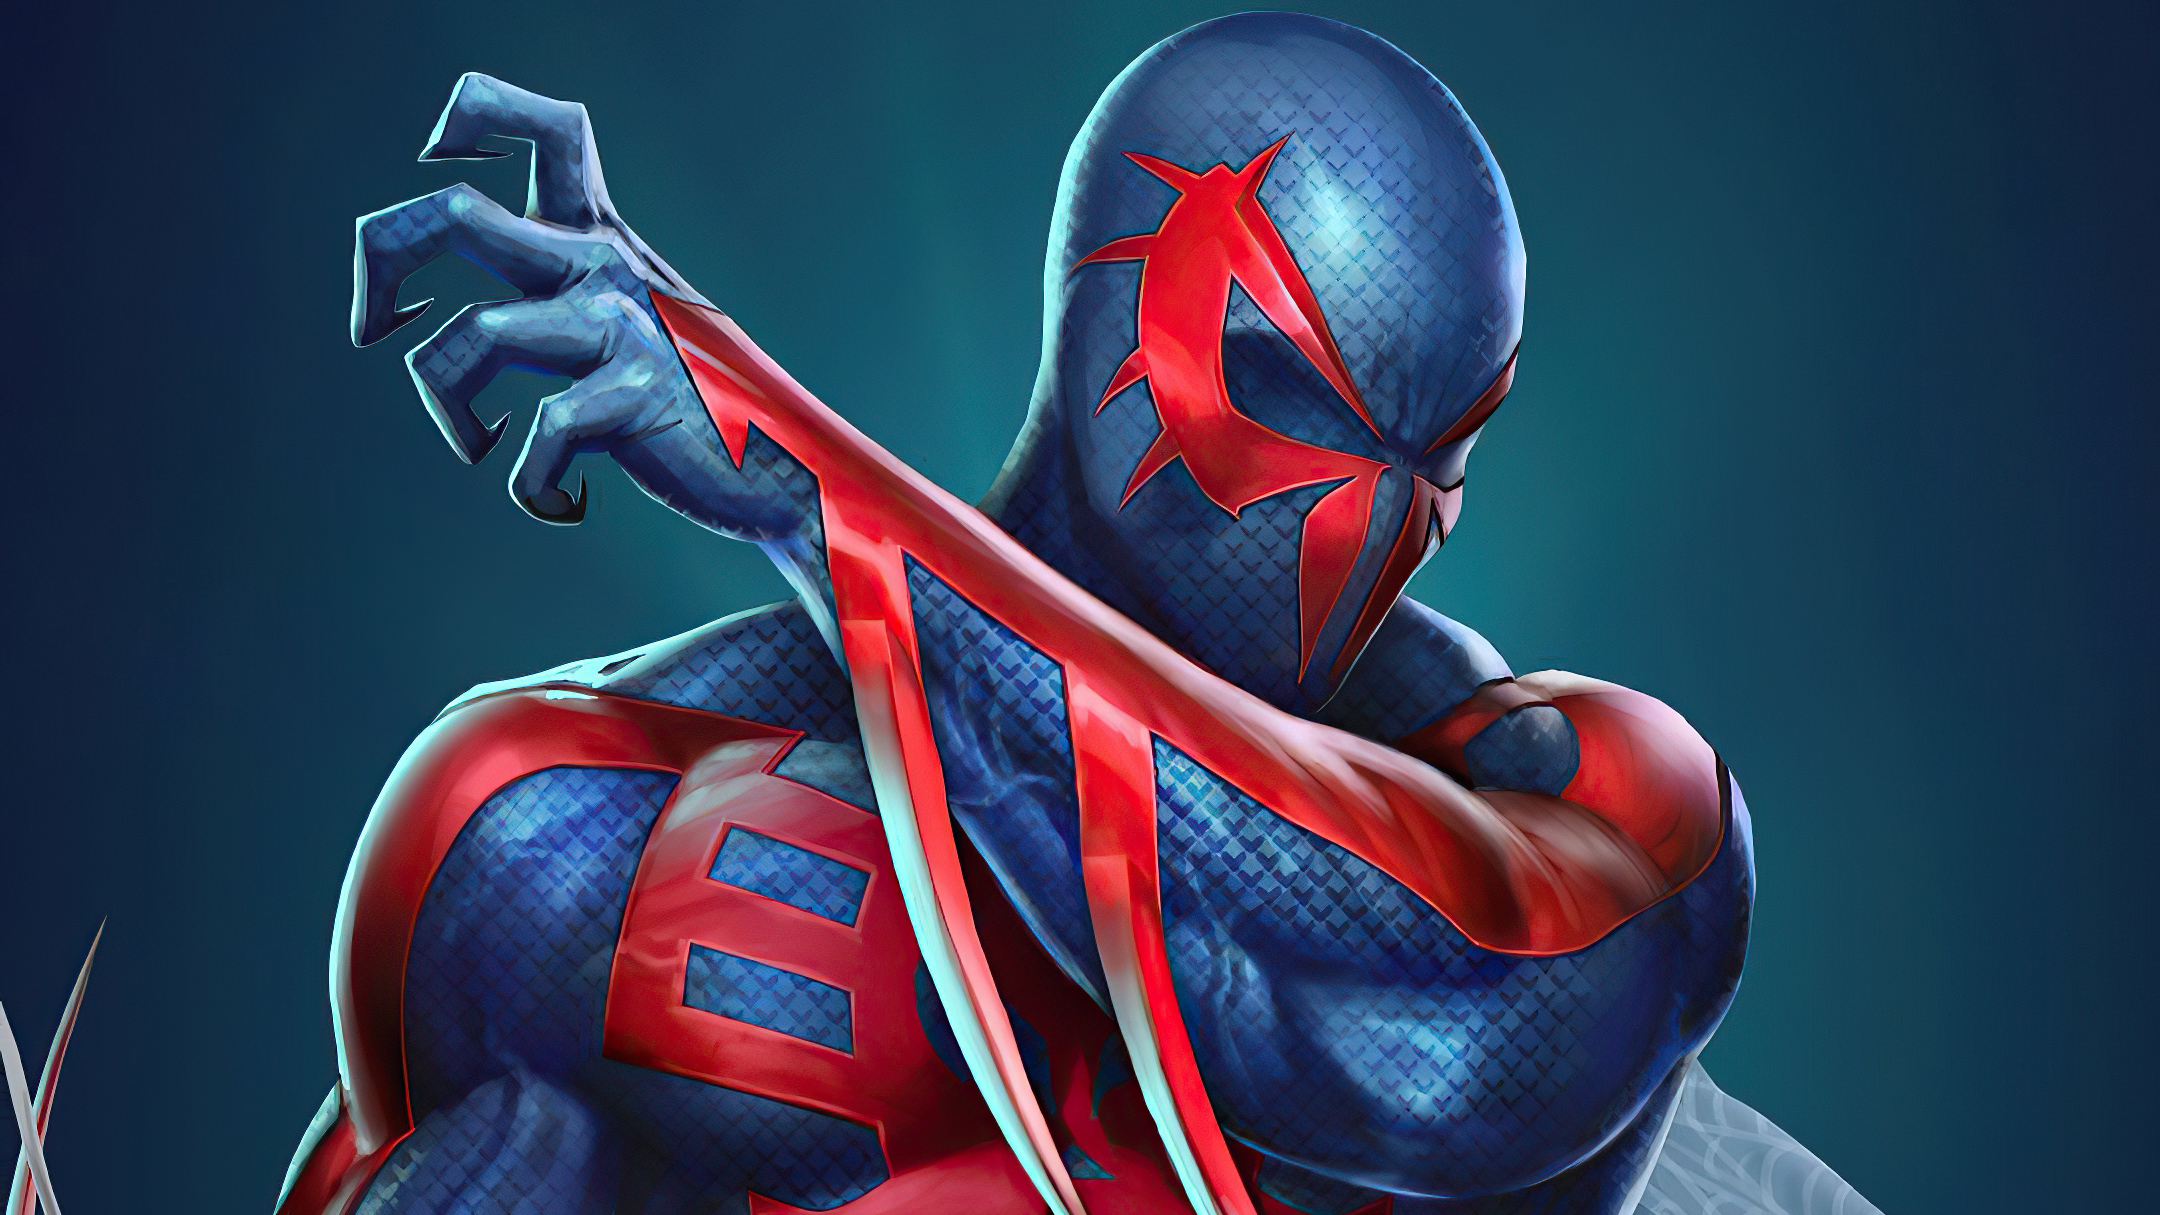 Spider Man 2099 Art, HD Superheroes, 4k Wallpapers, Images, Backgrounds